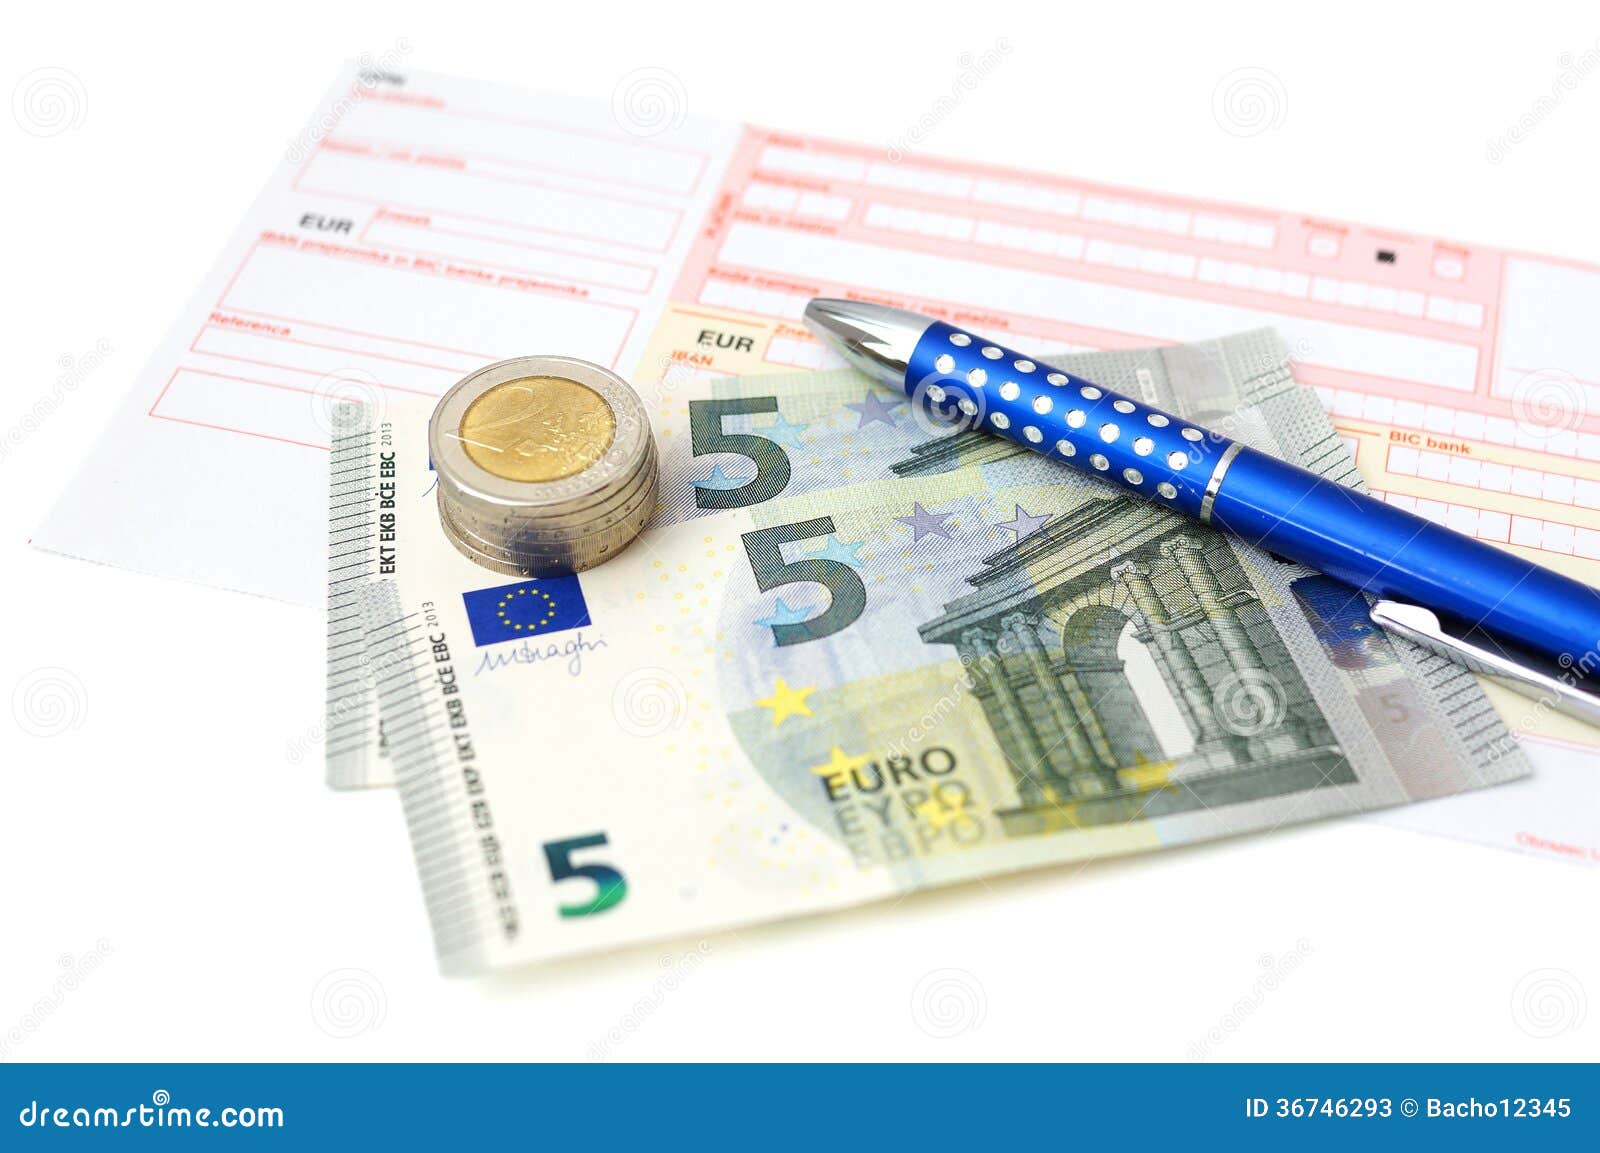 Euro Bank Transfer with Money, Slip, Pen Stock Image - Image of slip, iban:  36746293